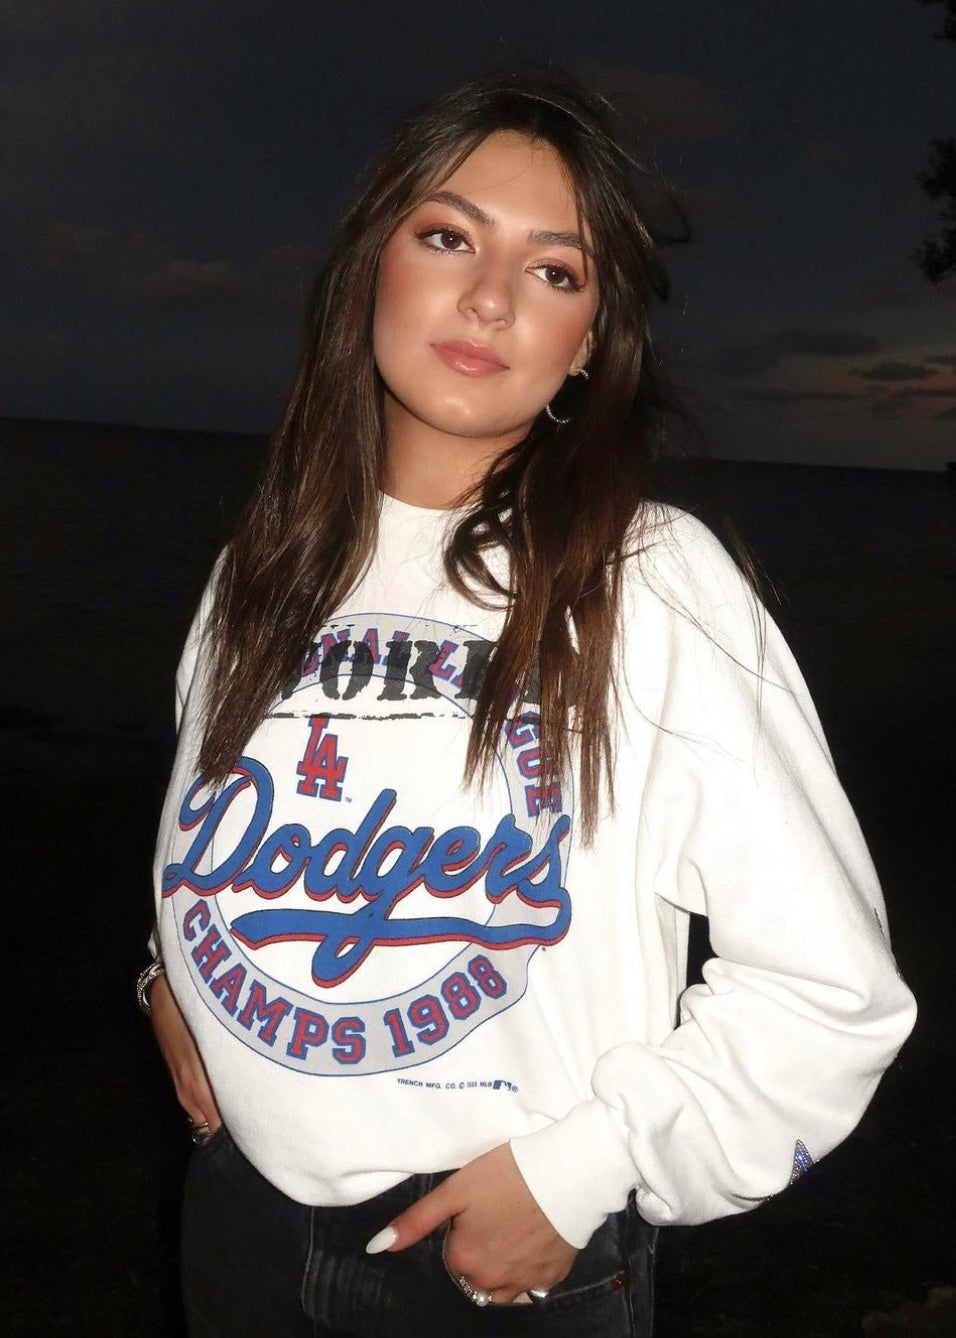 LA Dodgers, MLB One of a KIND Vintage Sweatshirt with Crystal Star Design